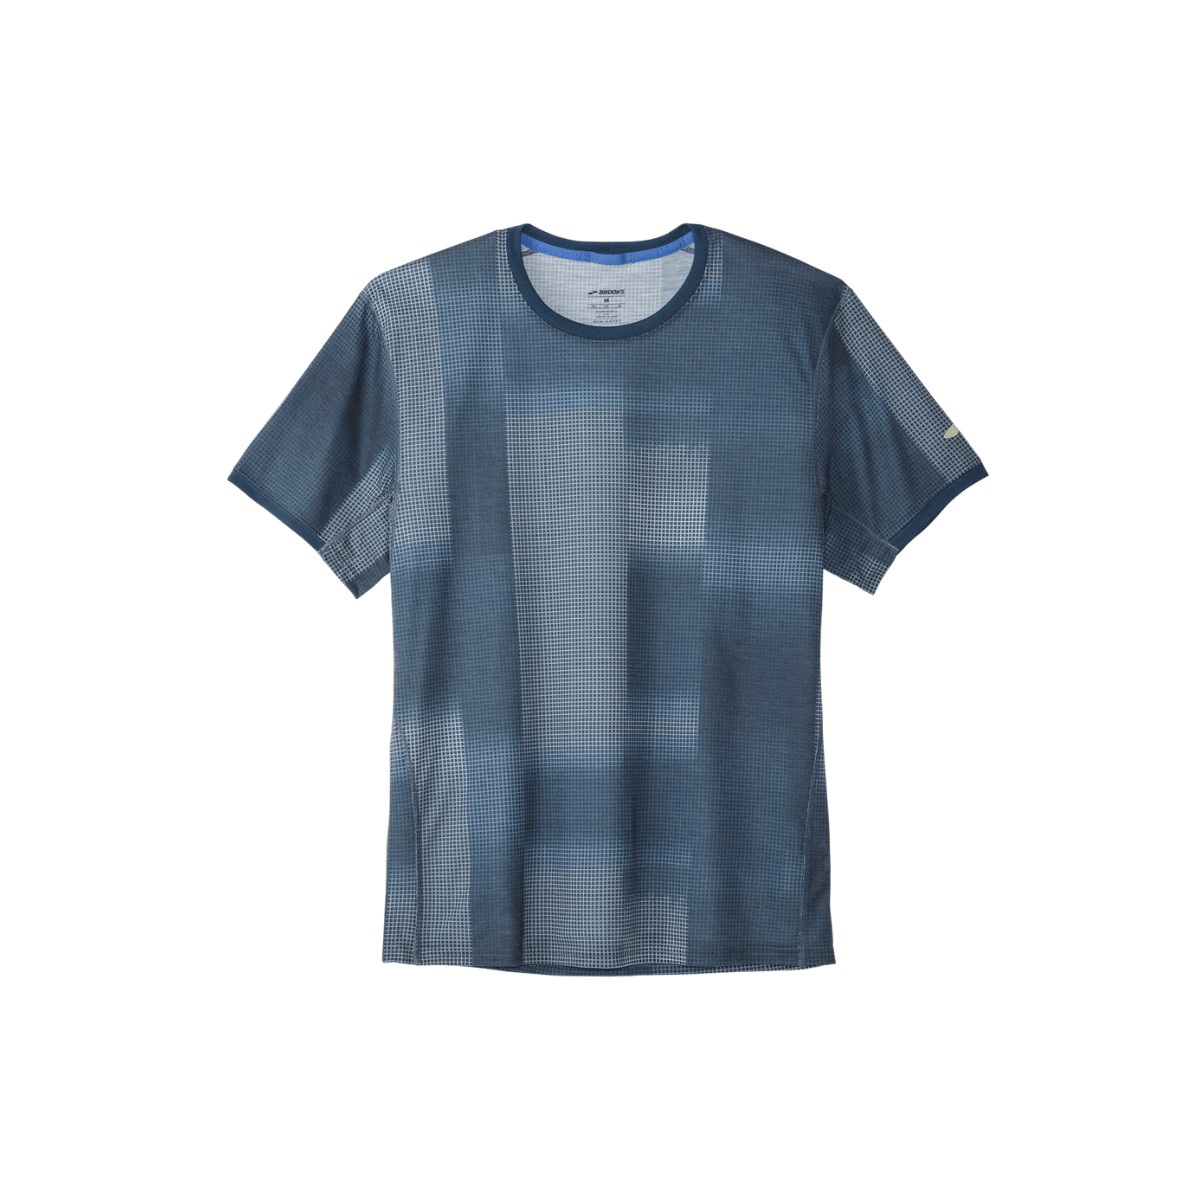 Brooks Distance Graphic T-Shirt Short Sleeve Bleu Gris, Taille S